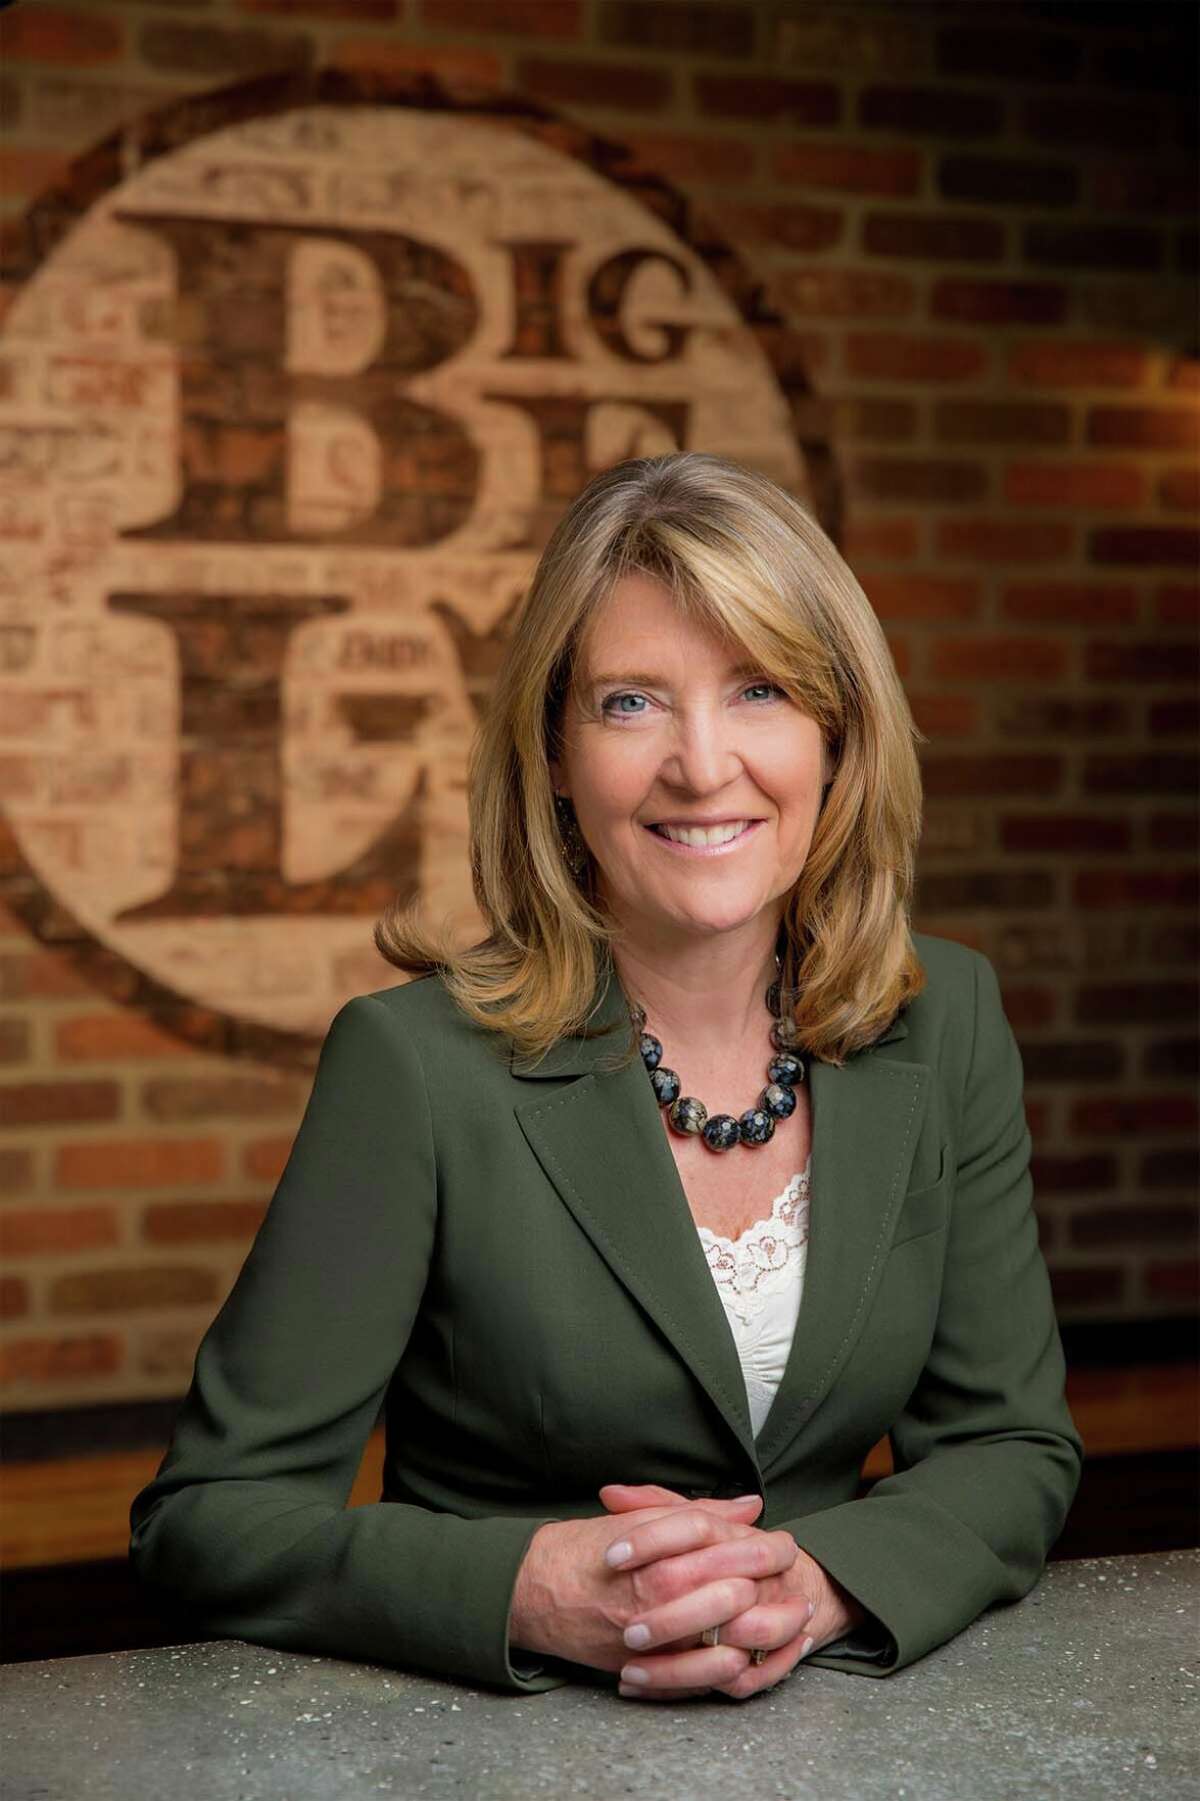 Cindi Bigelow oversees Connecticut-based Bigelow Tea, a titan in the U.S. tea industry.